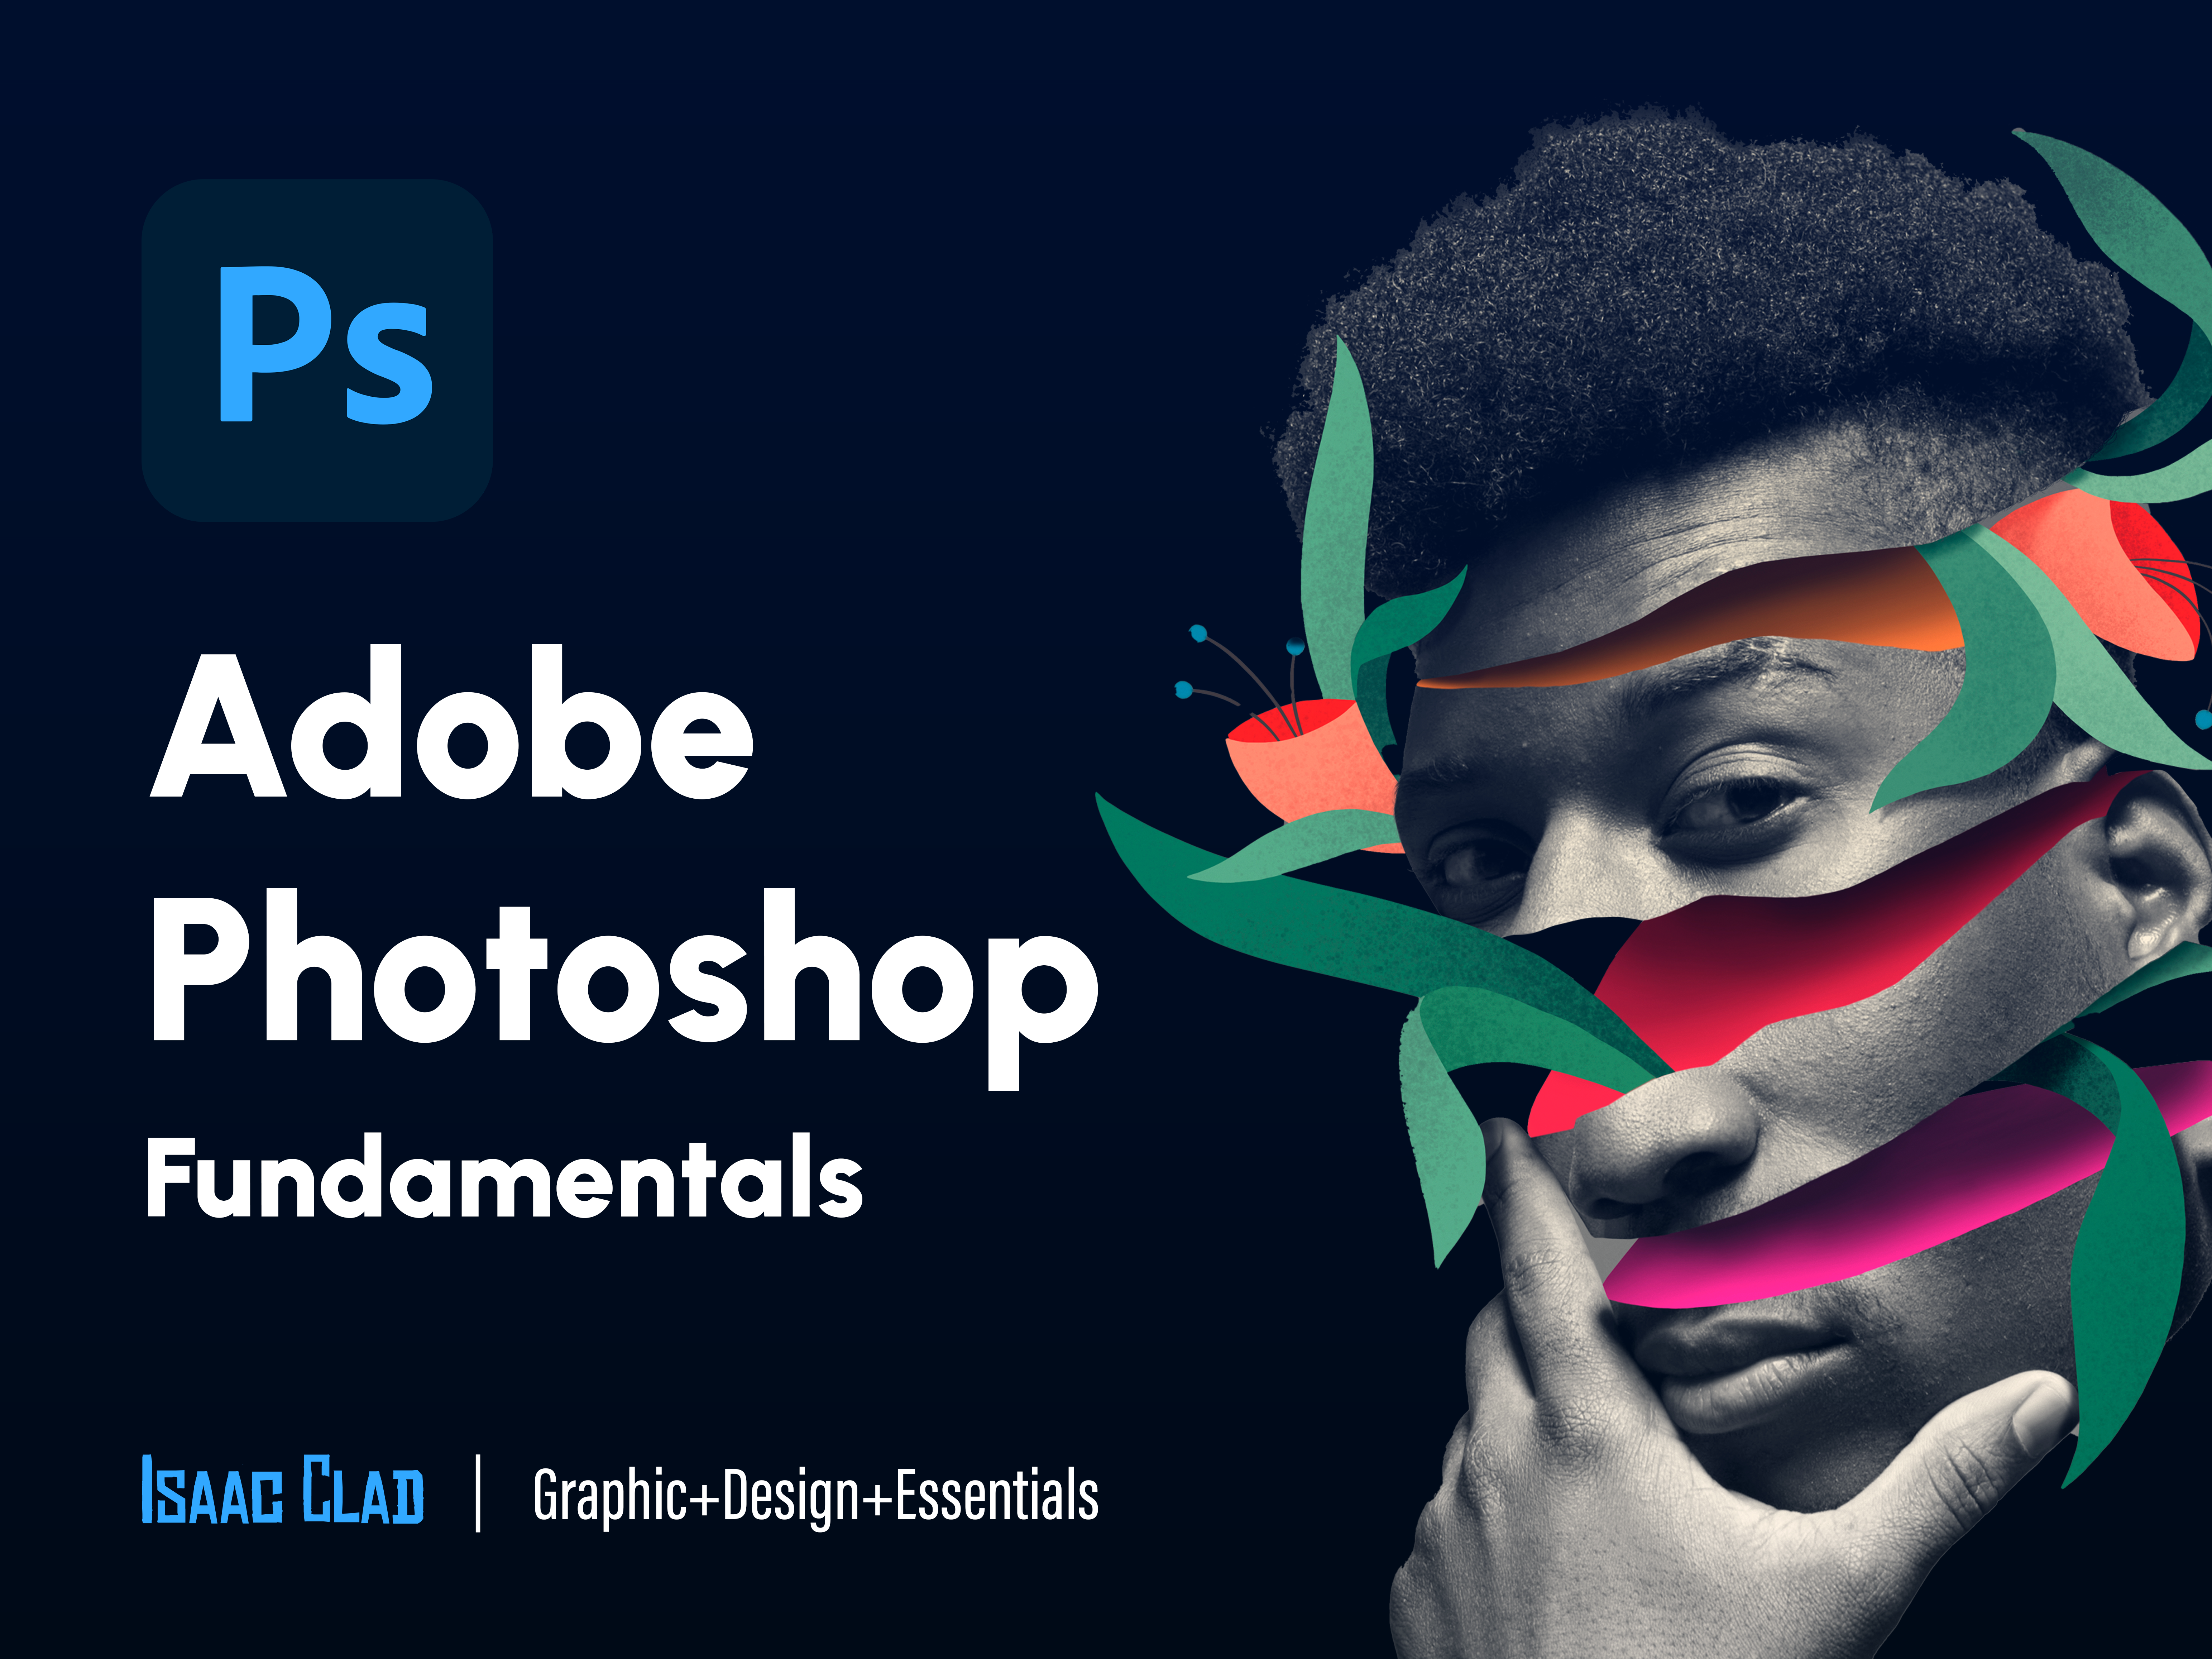 Adobe Photoshop Fundamentals